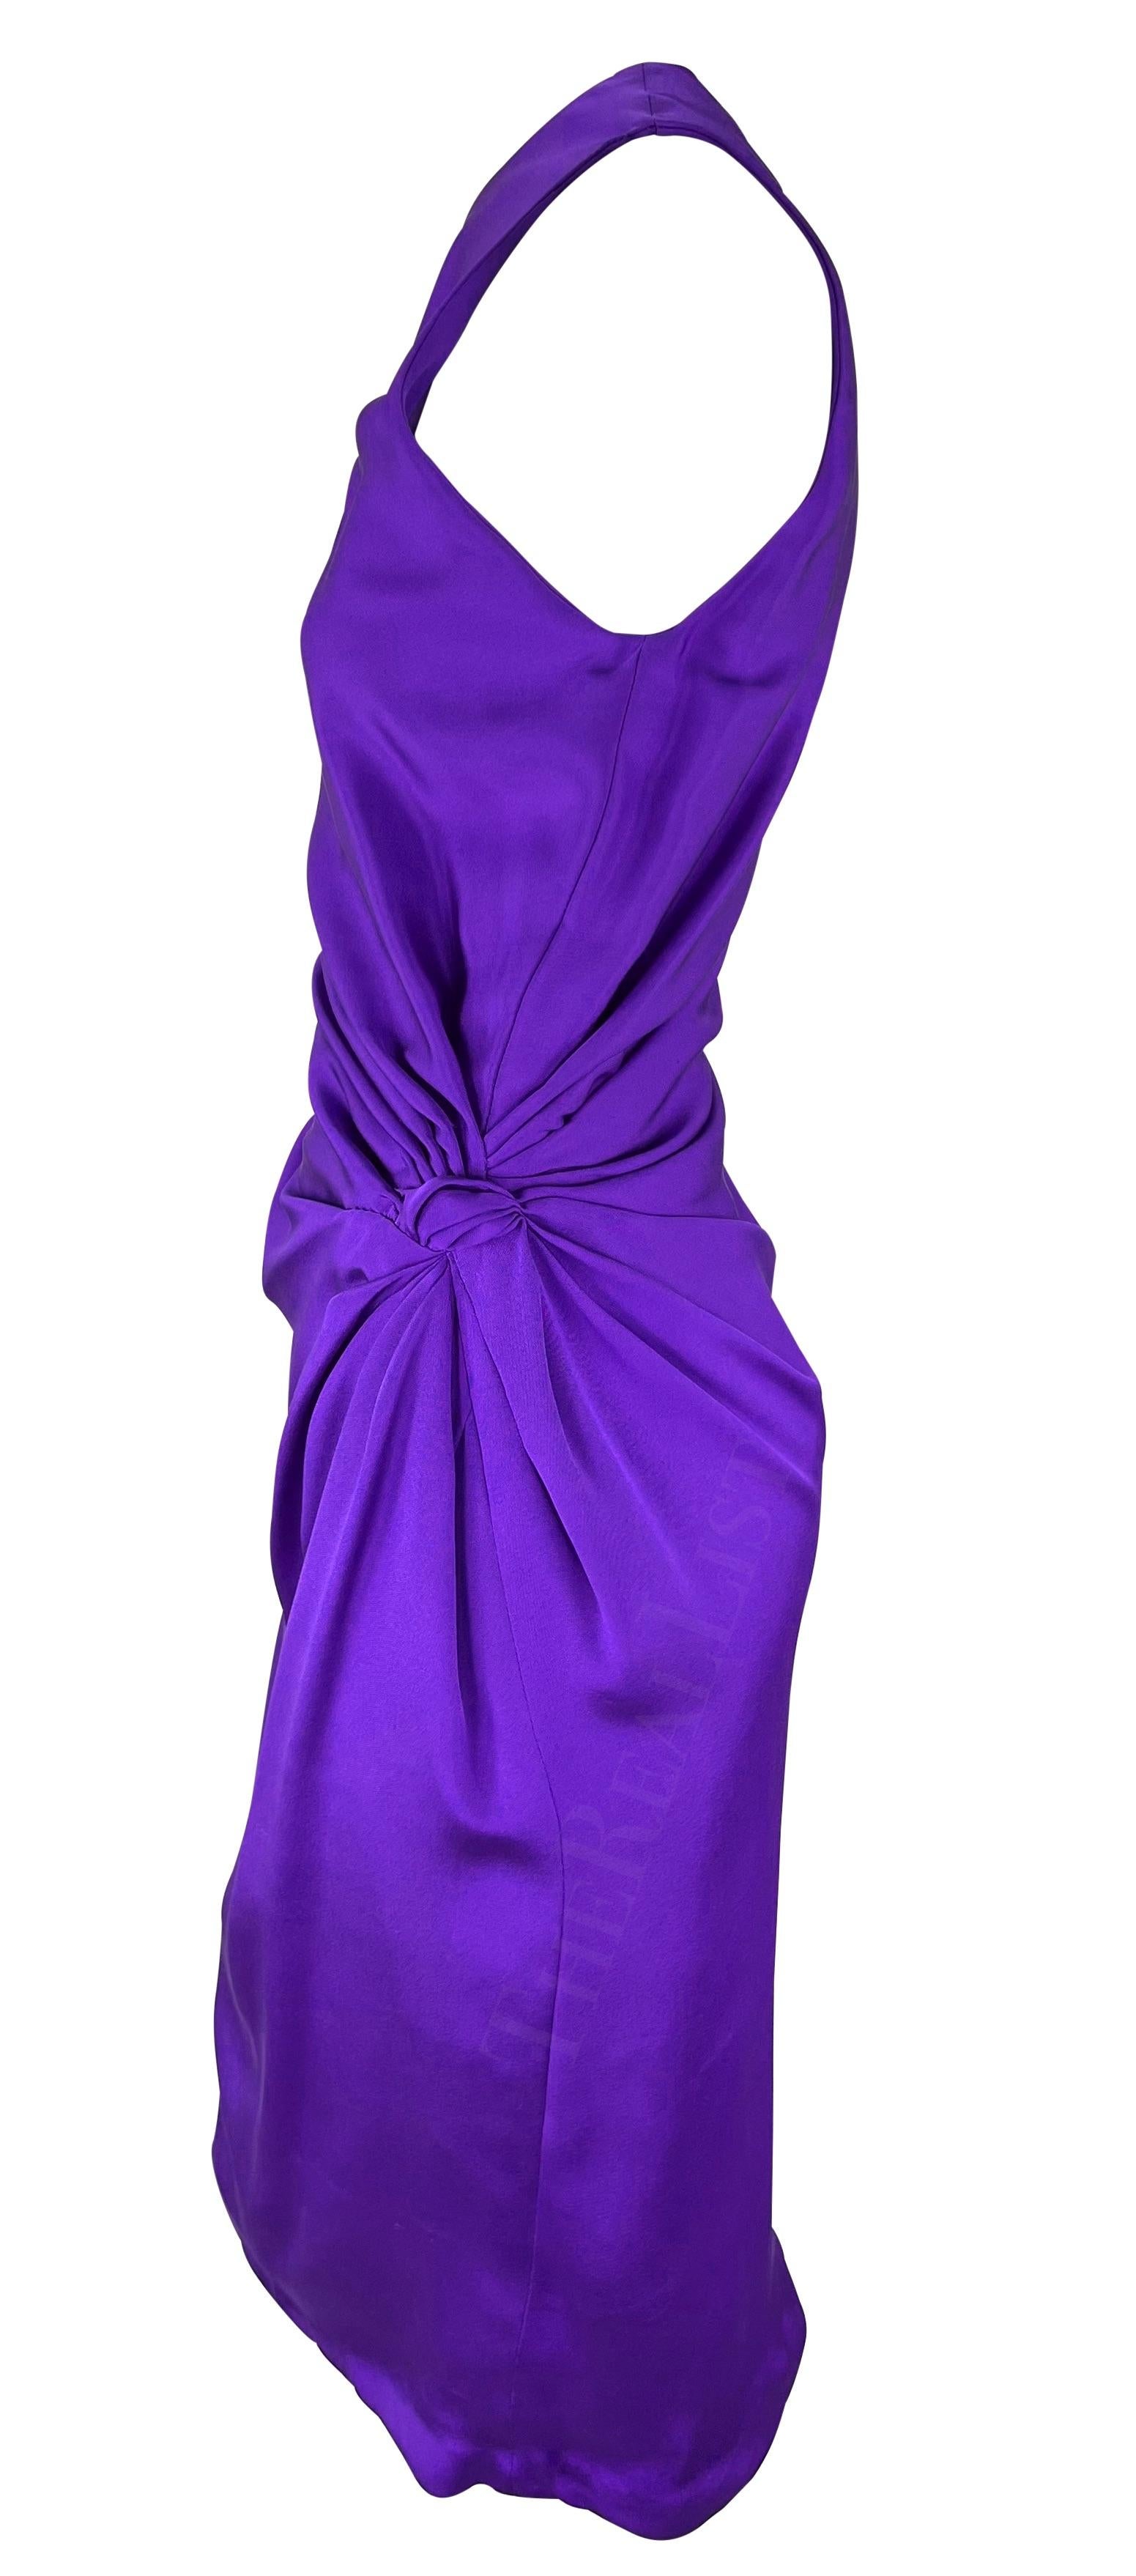 S/S 1991 Gianni Versace Purple Gathered Ruched Sleeveless Cocktail Dress Bon état - En vente à West Hollywood, CA